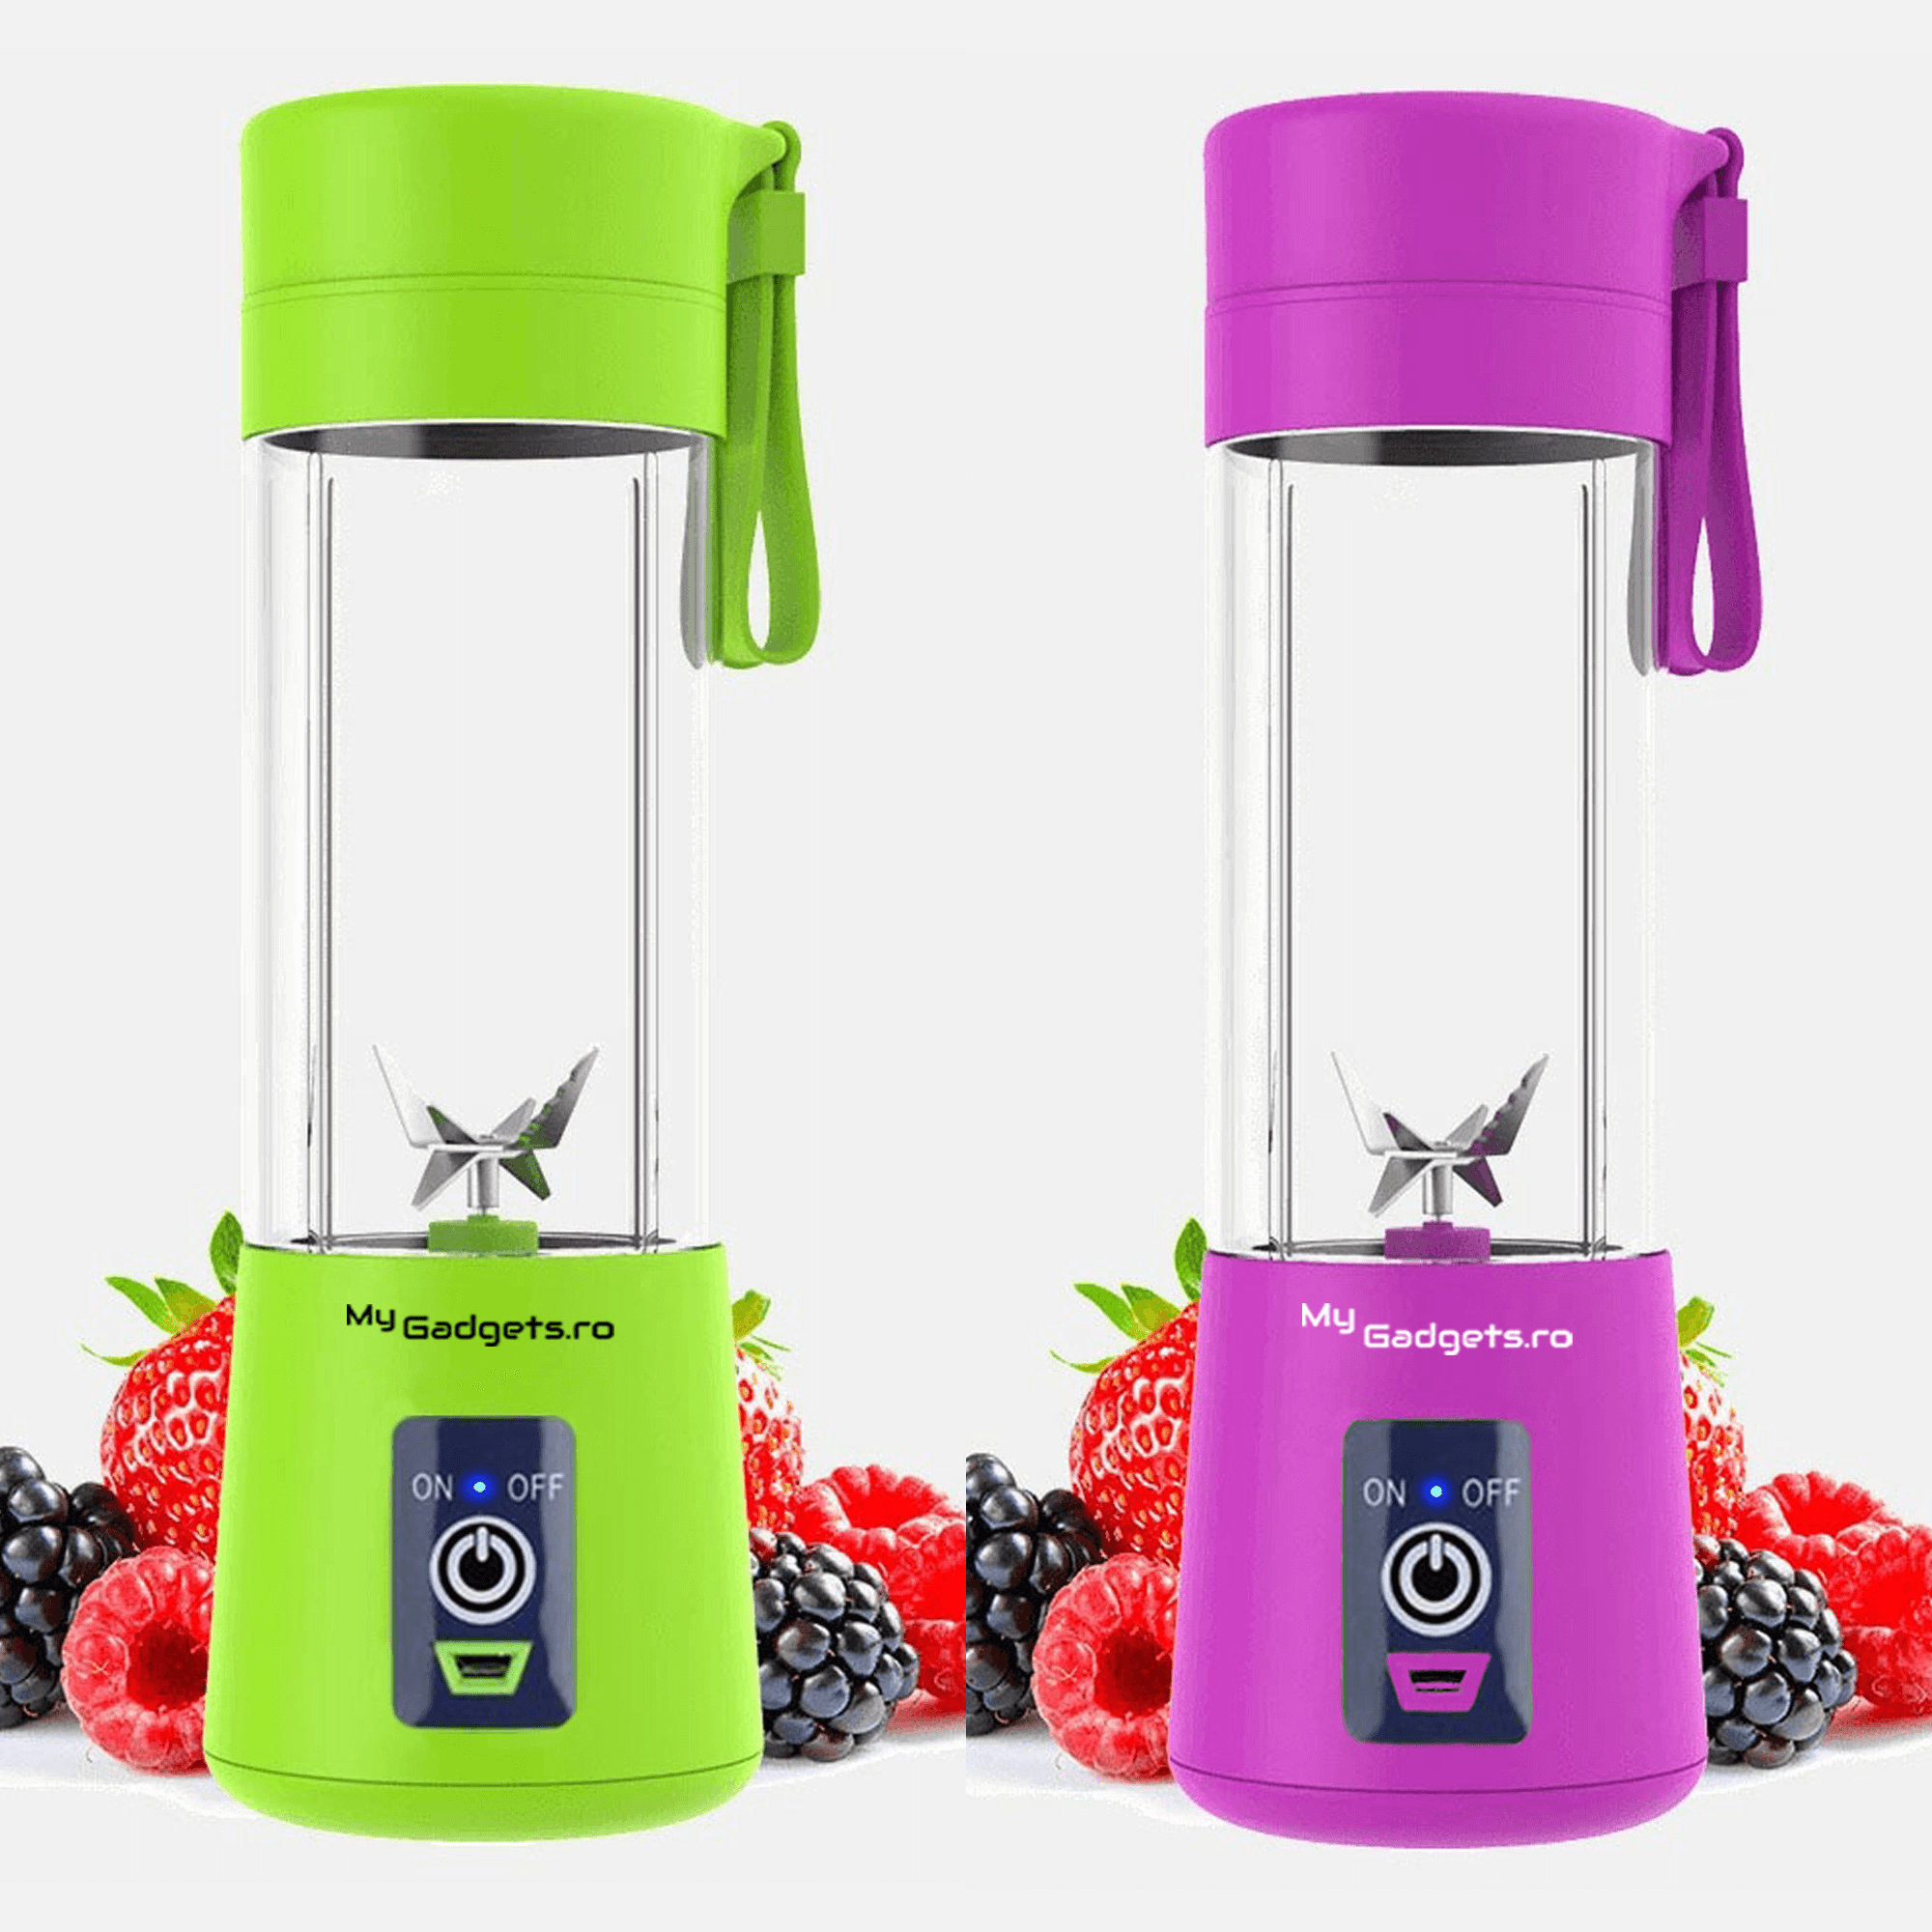 Lure gallon periscope Blender portabil pentru smoothie » Magazin online de gadgeturi utile